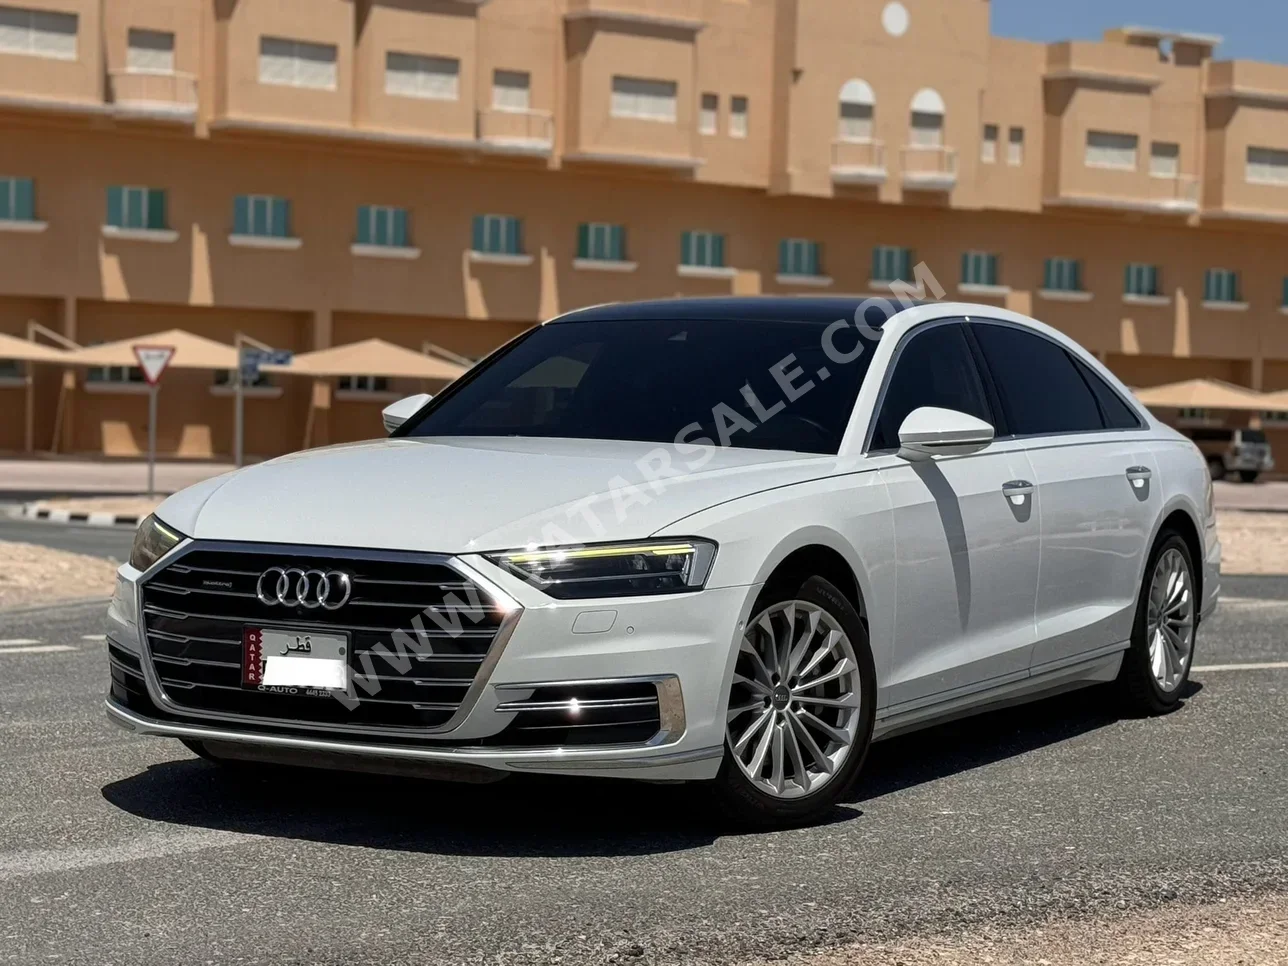 Audi  A8  2018  Automatic  62,000 Km  6 Cylinder  All Wheel Drive (AWD)  Sedan  White